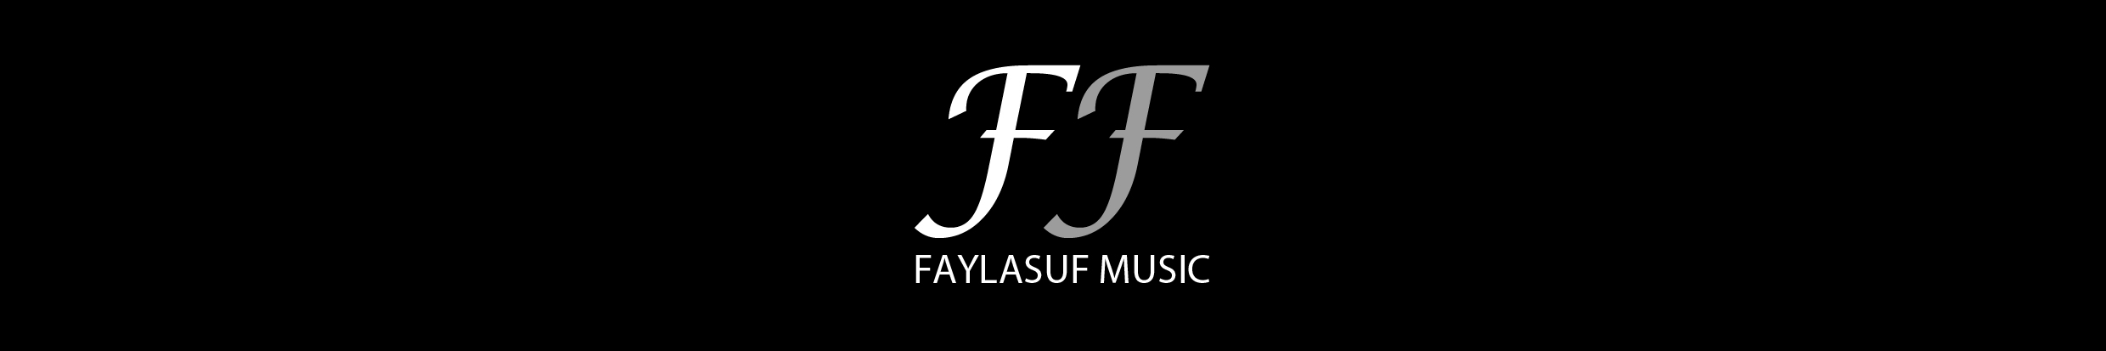 Faylasuf